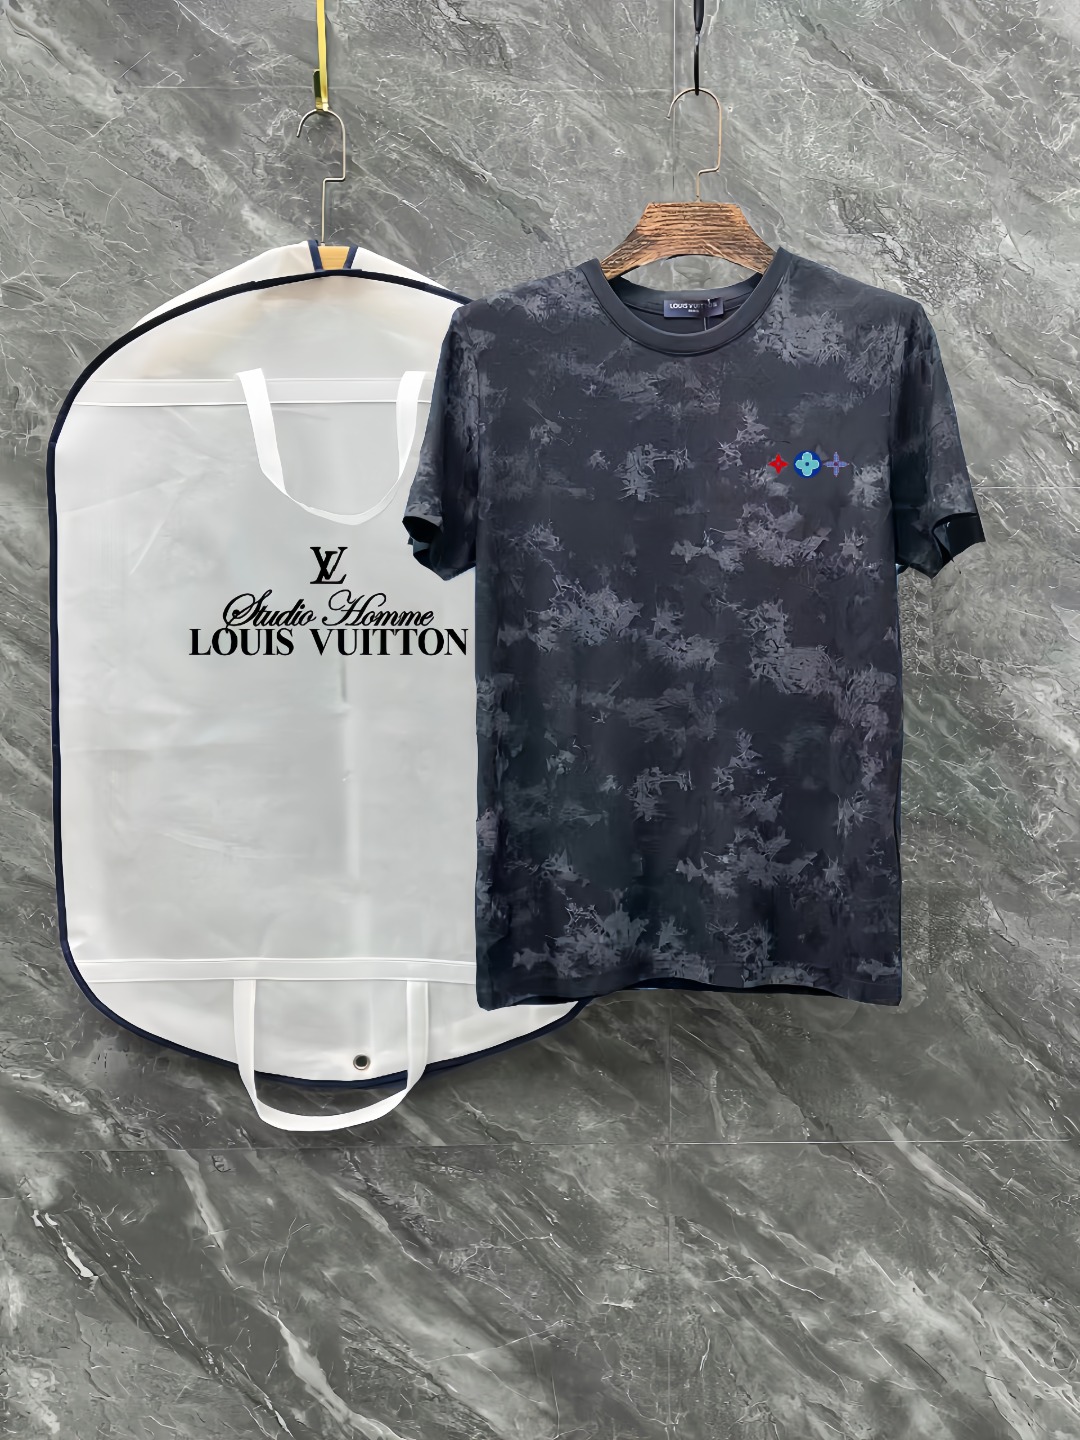 Louis Vuitton Clothing T-Shirt Black White Unisex Cotton Mercerized Spring/Summer Collection Fashion Short Sleeve